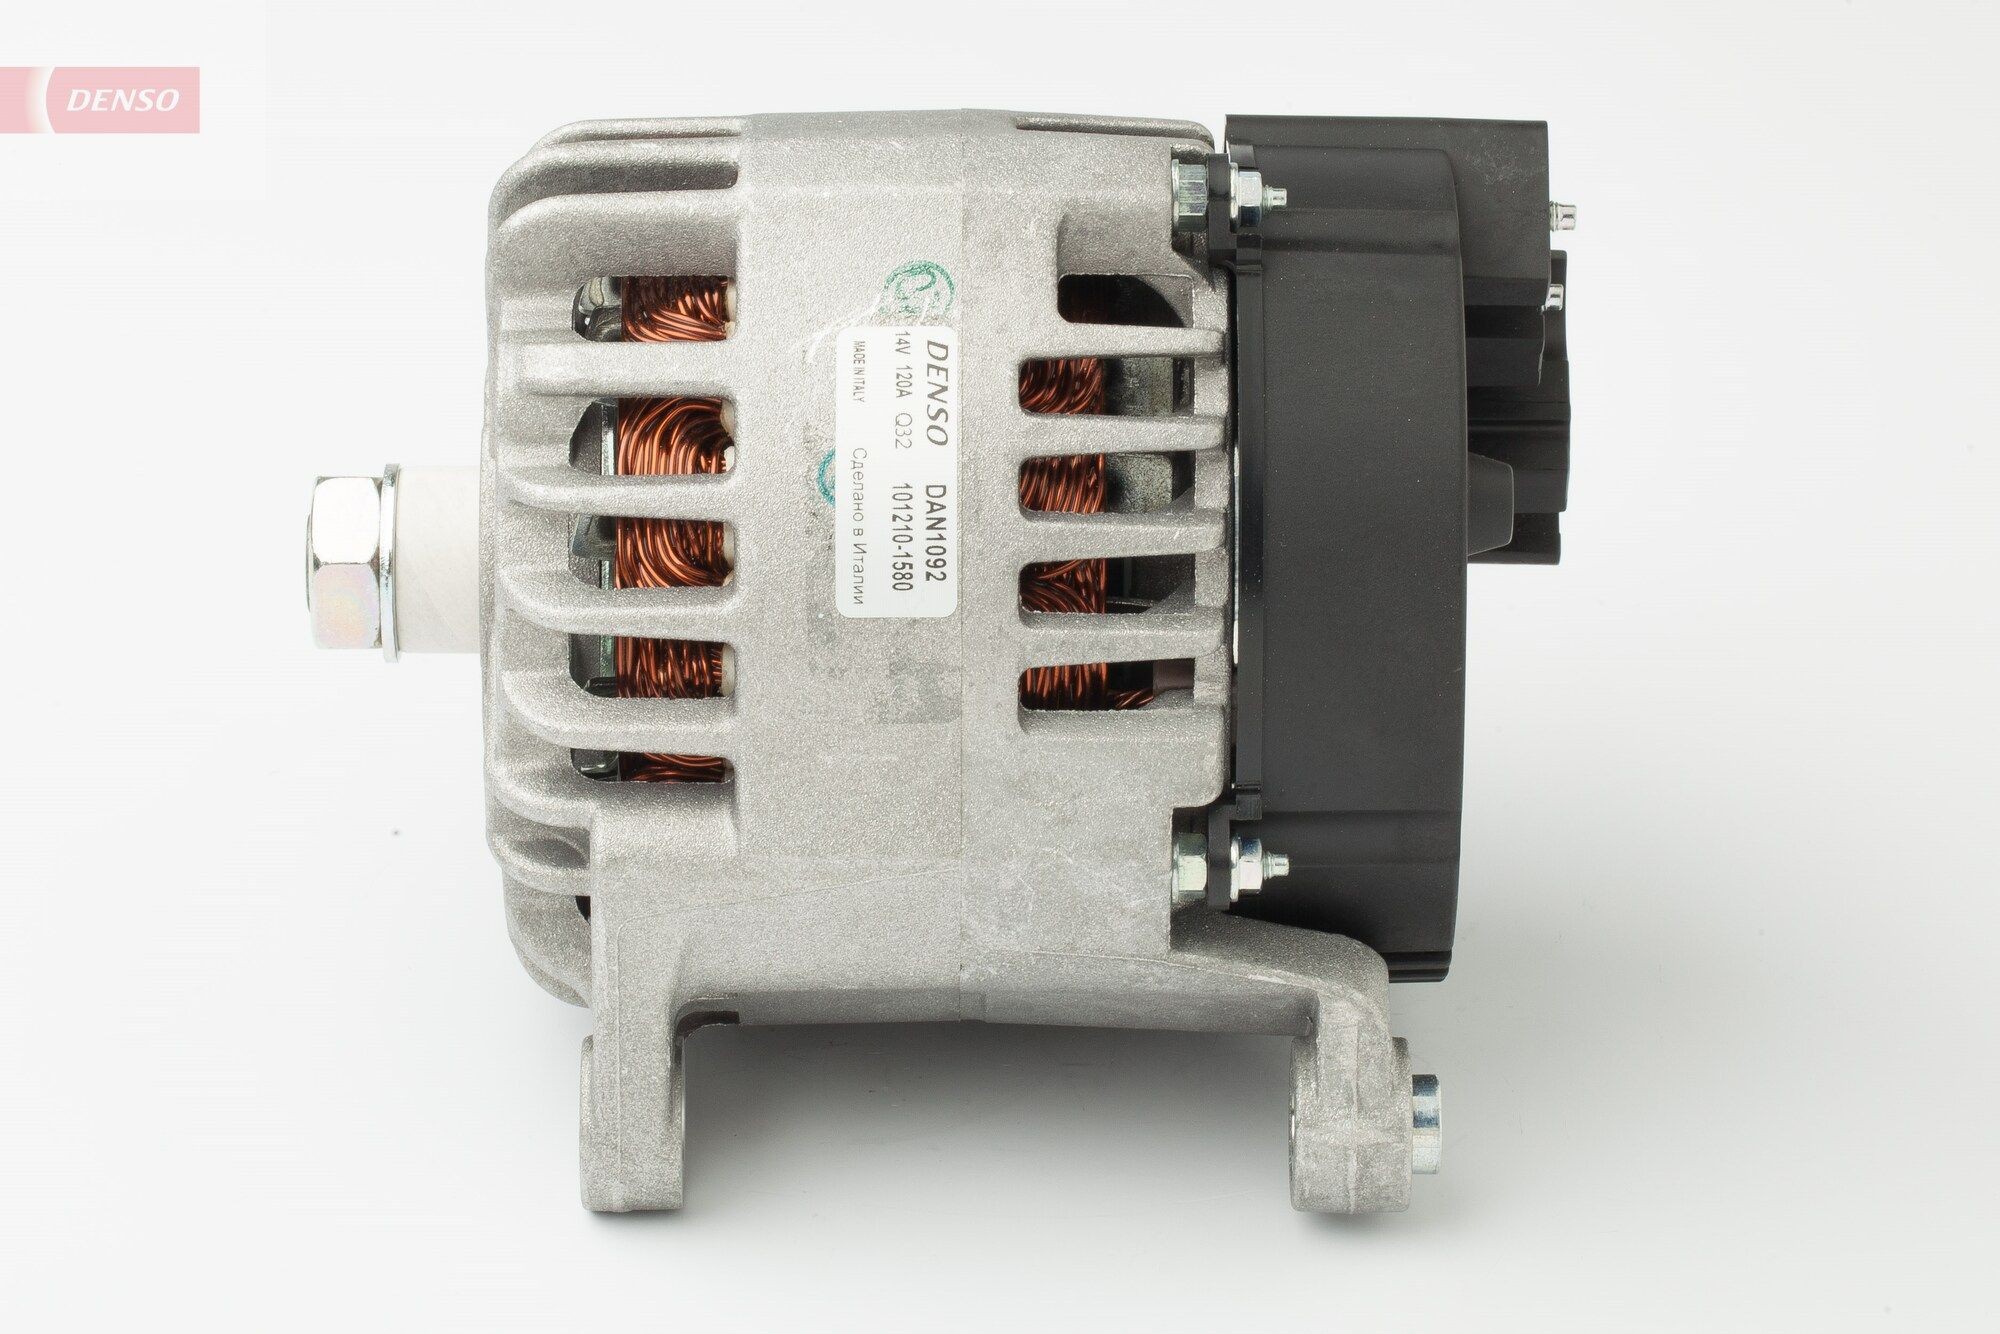 DENSO 14V, 120A Generator DAN1092 buy